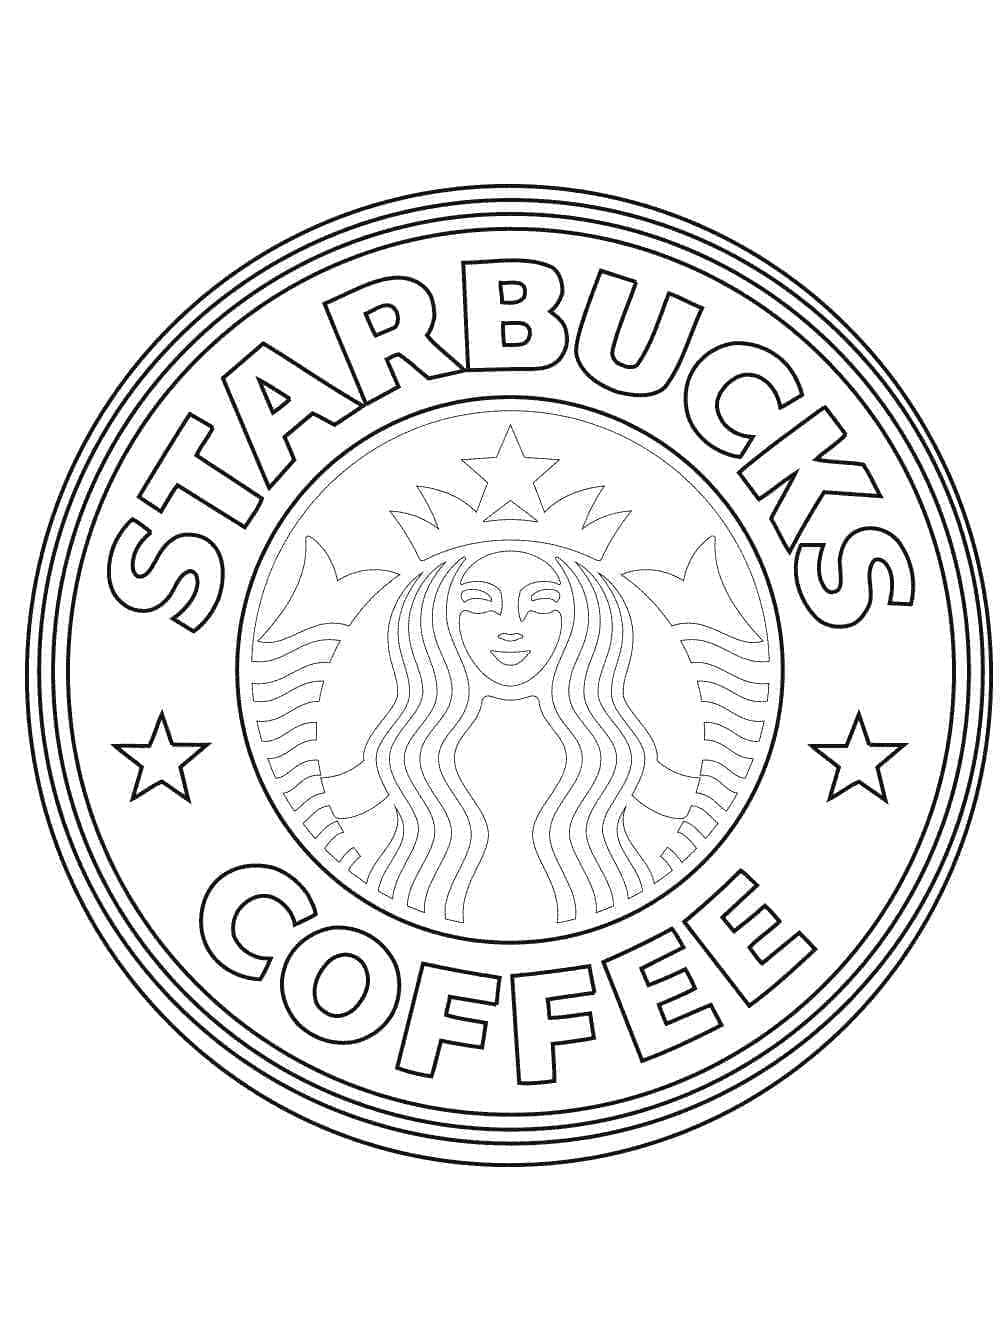 Logo Starbucks coloring page